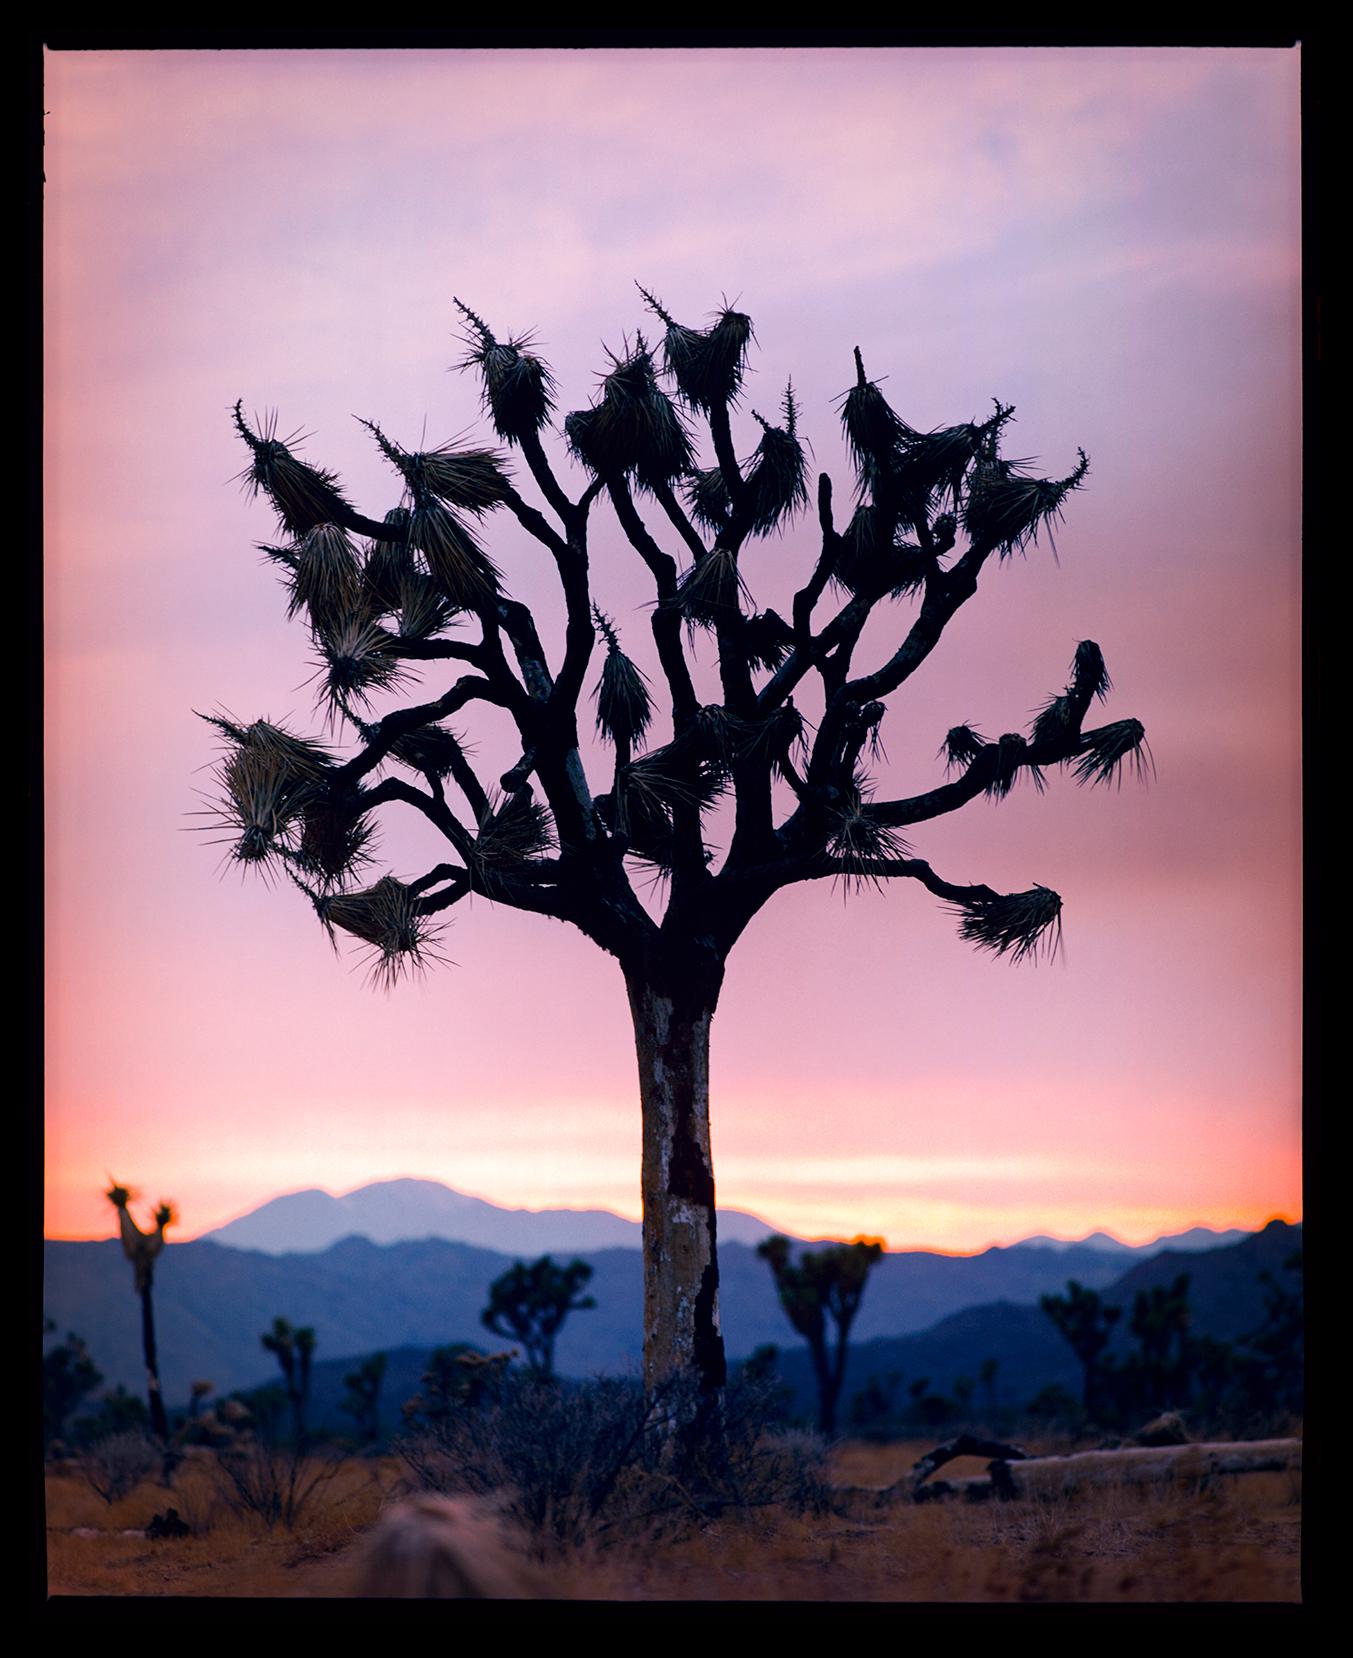 Richard Heeps Landscape Photograph - Joshua Tree, Mojave Desert, California (M)- American landscape color photography